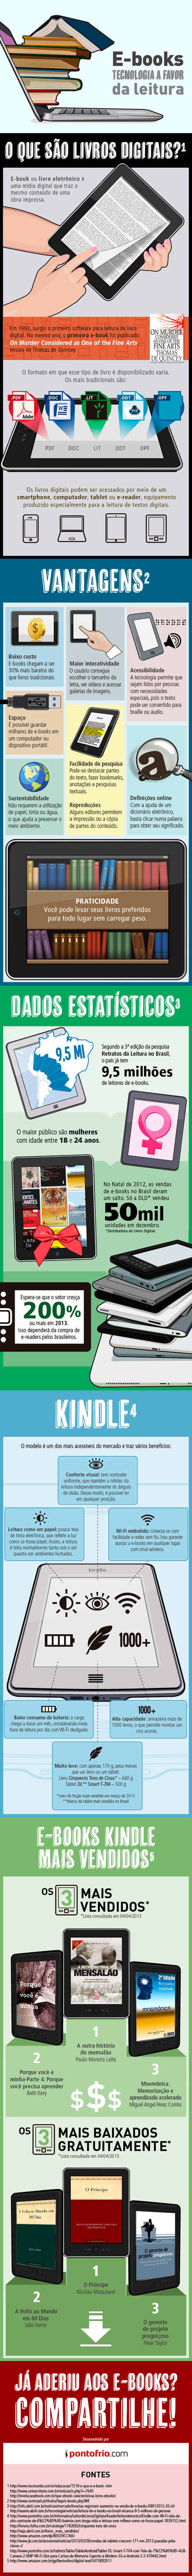 E-Books: tecnologia a favor da leitura | Web 2.0 for juandoming | Scoop.it